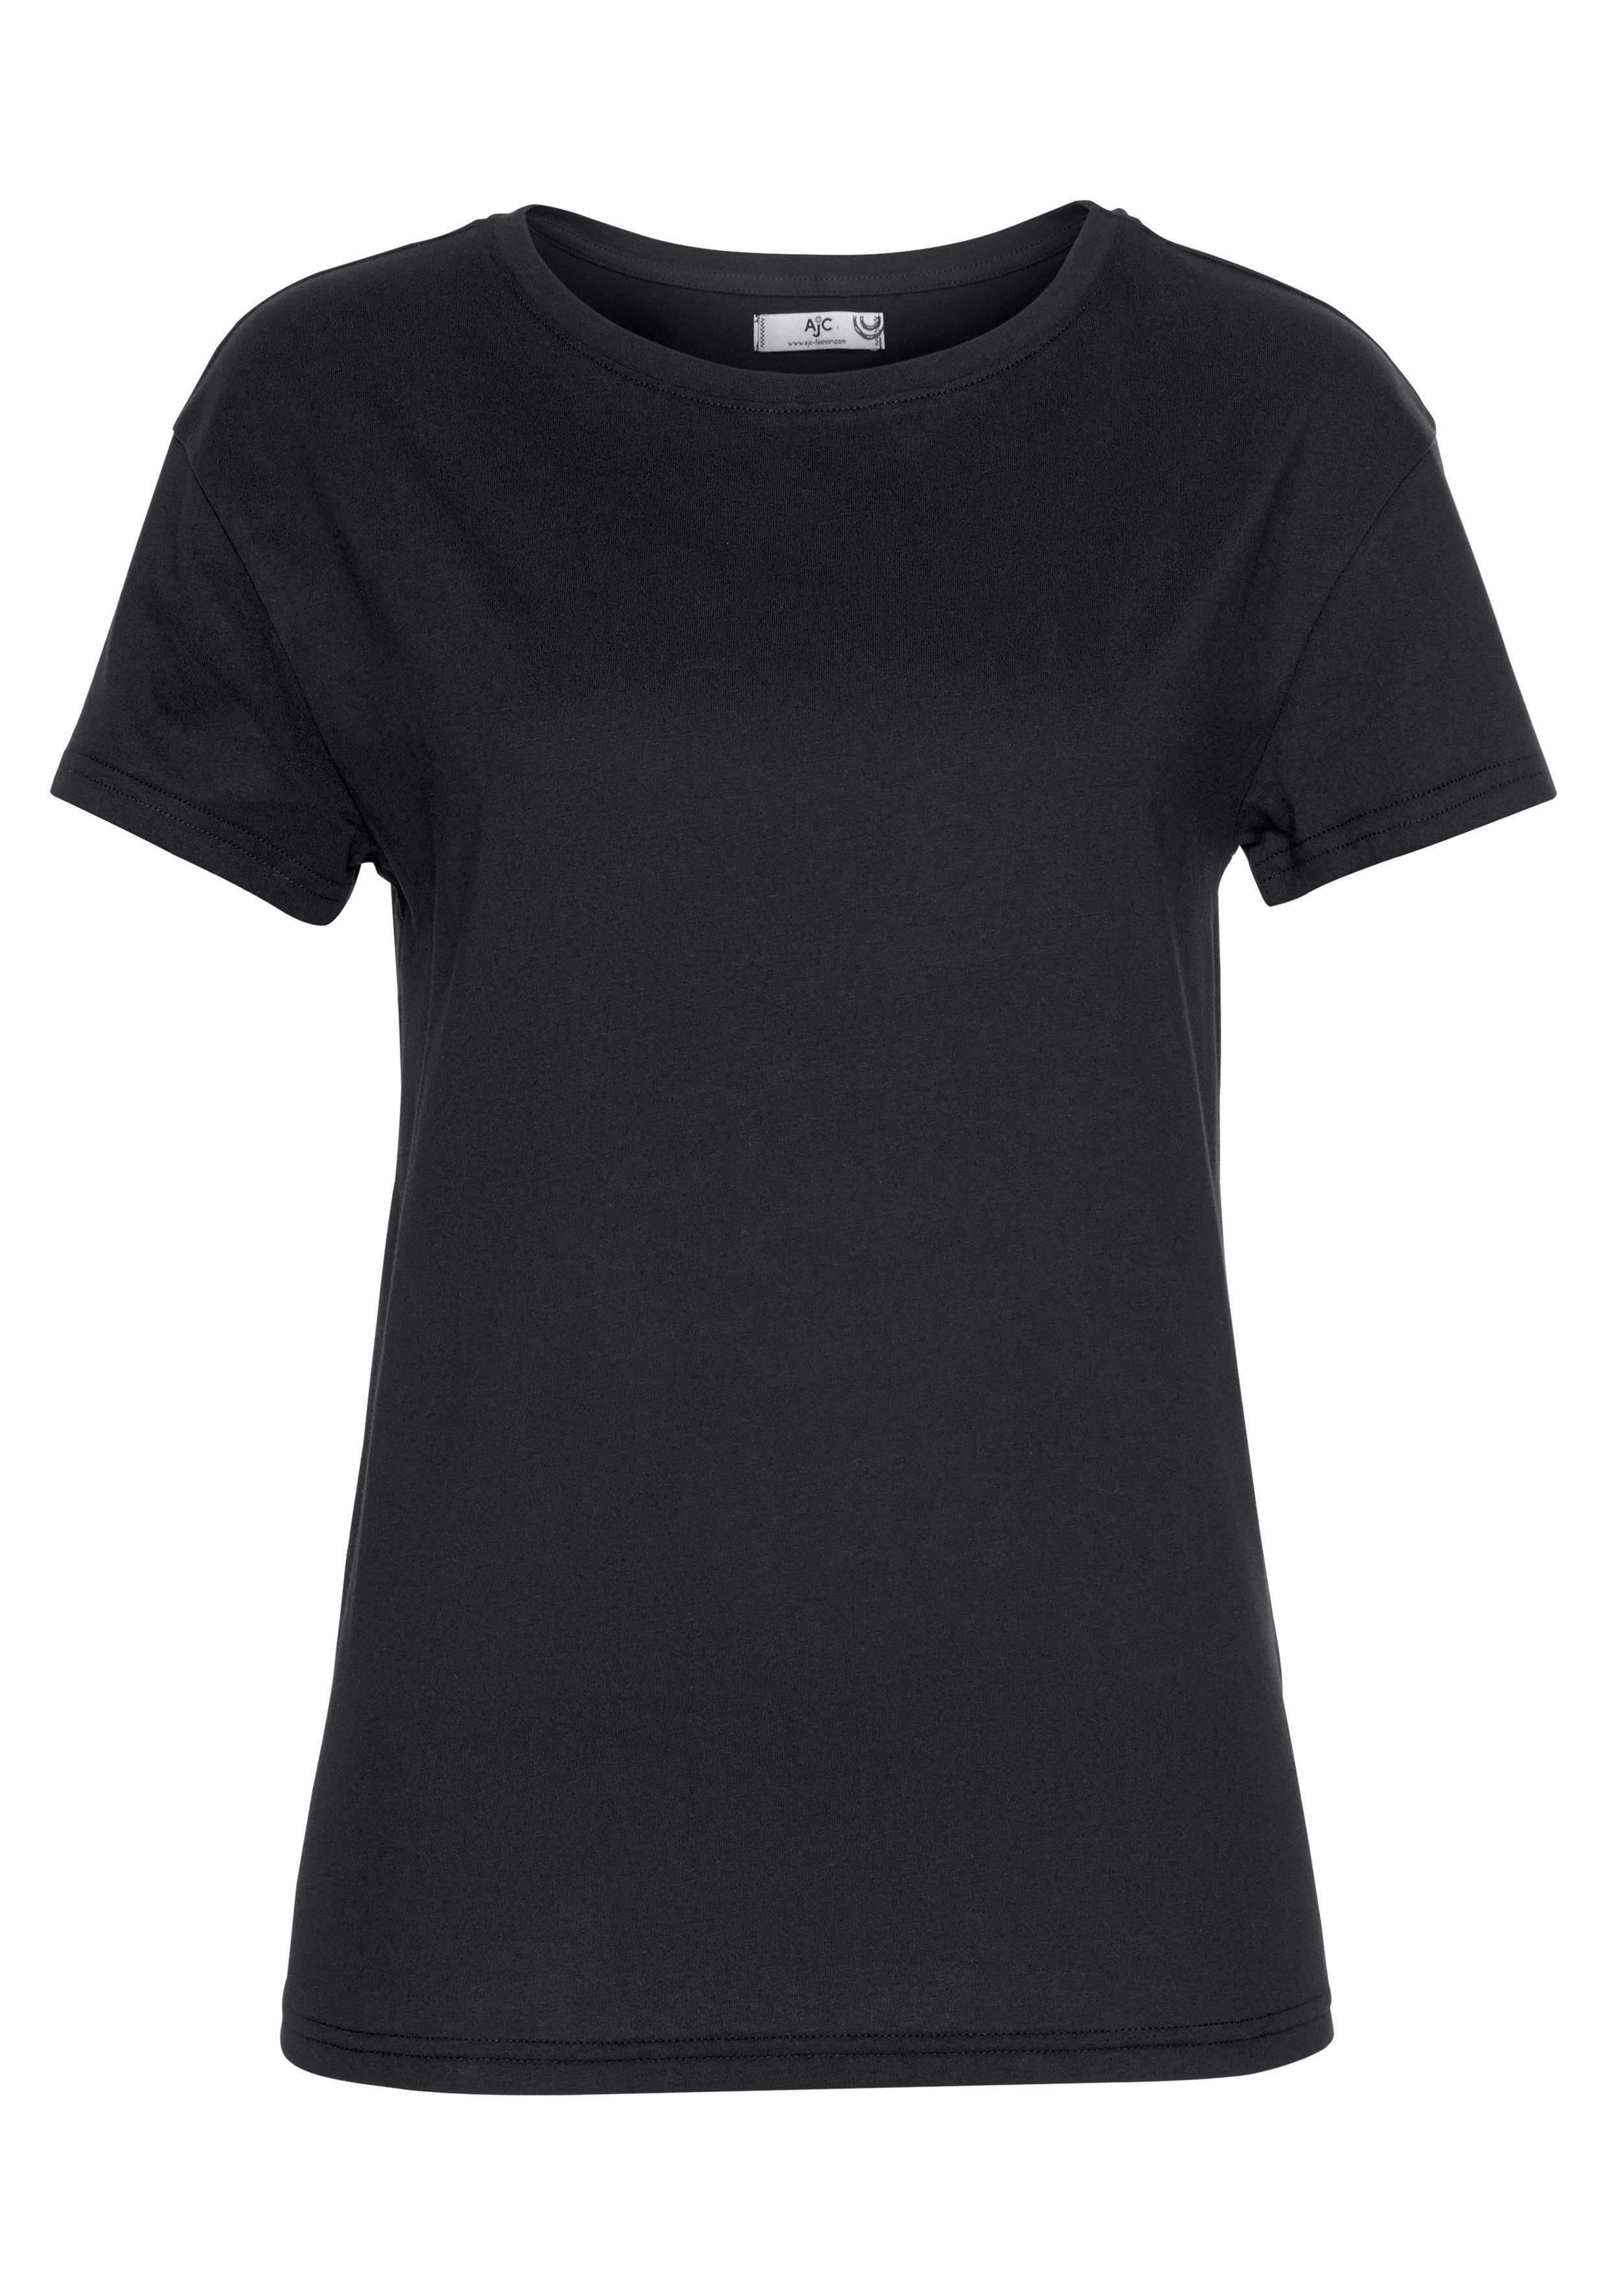 KOLLEKTION trendigen - im AJC schwarz T-Shirt Oversized-Look NEUE